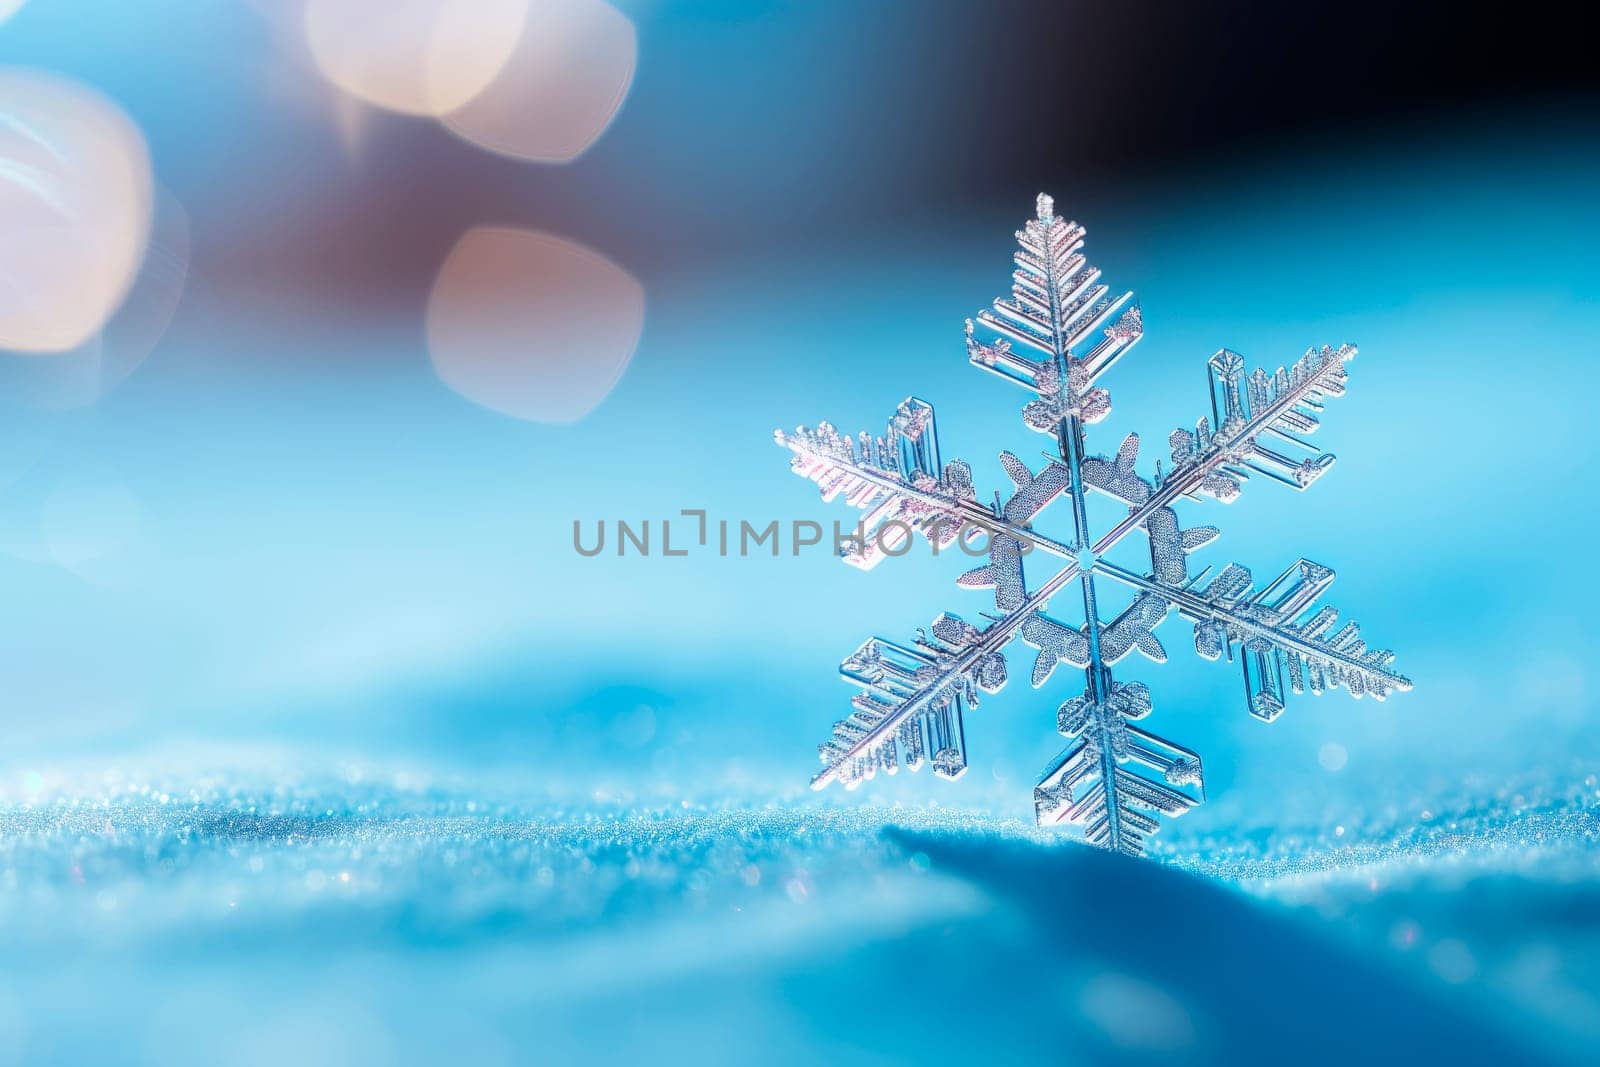 Snowflake close-up, background in blur by Spirina